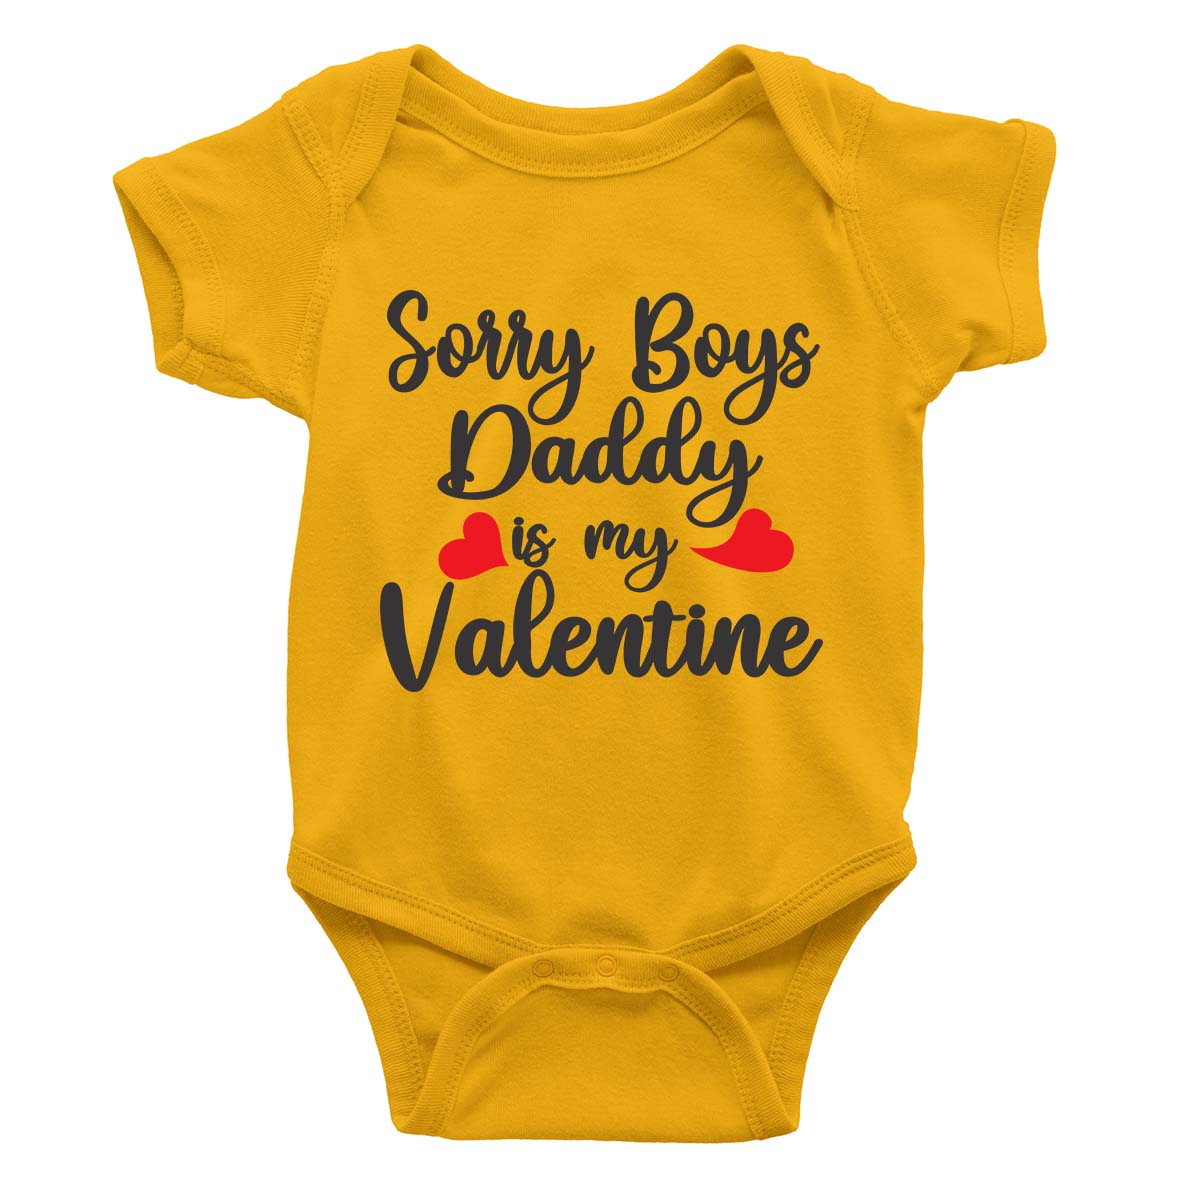 jopo Sorry Boys Daddy is my valentine romper mustard